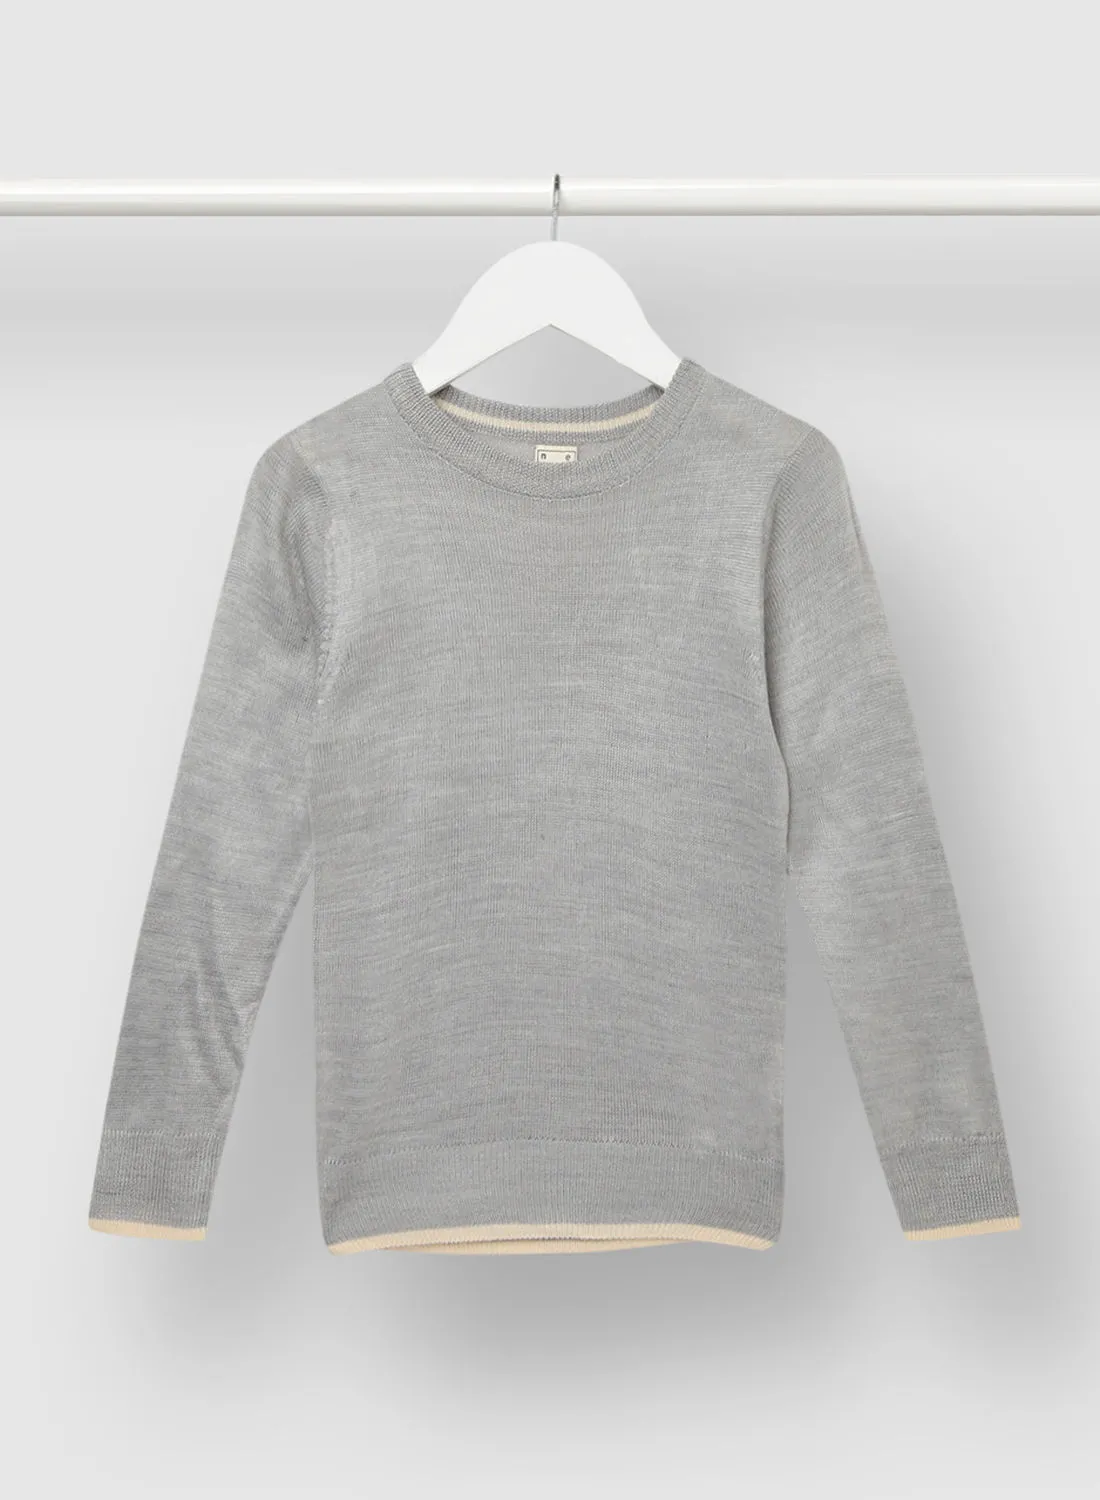 NEON Boy Casual Long Sleeve Sweater Grey